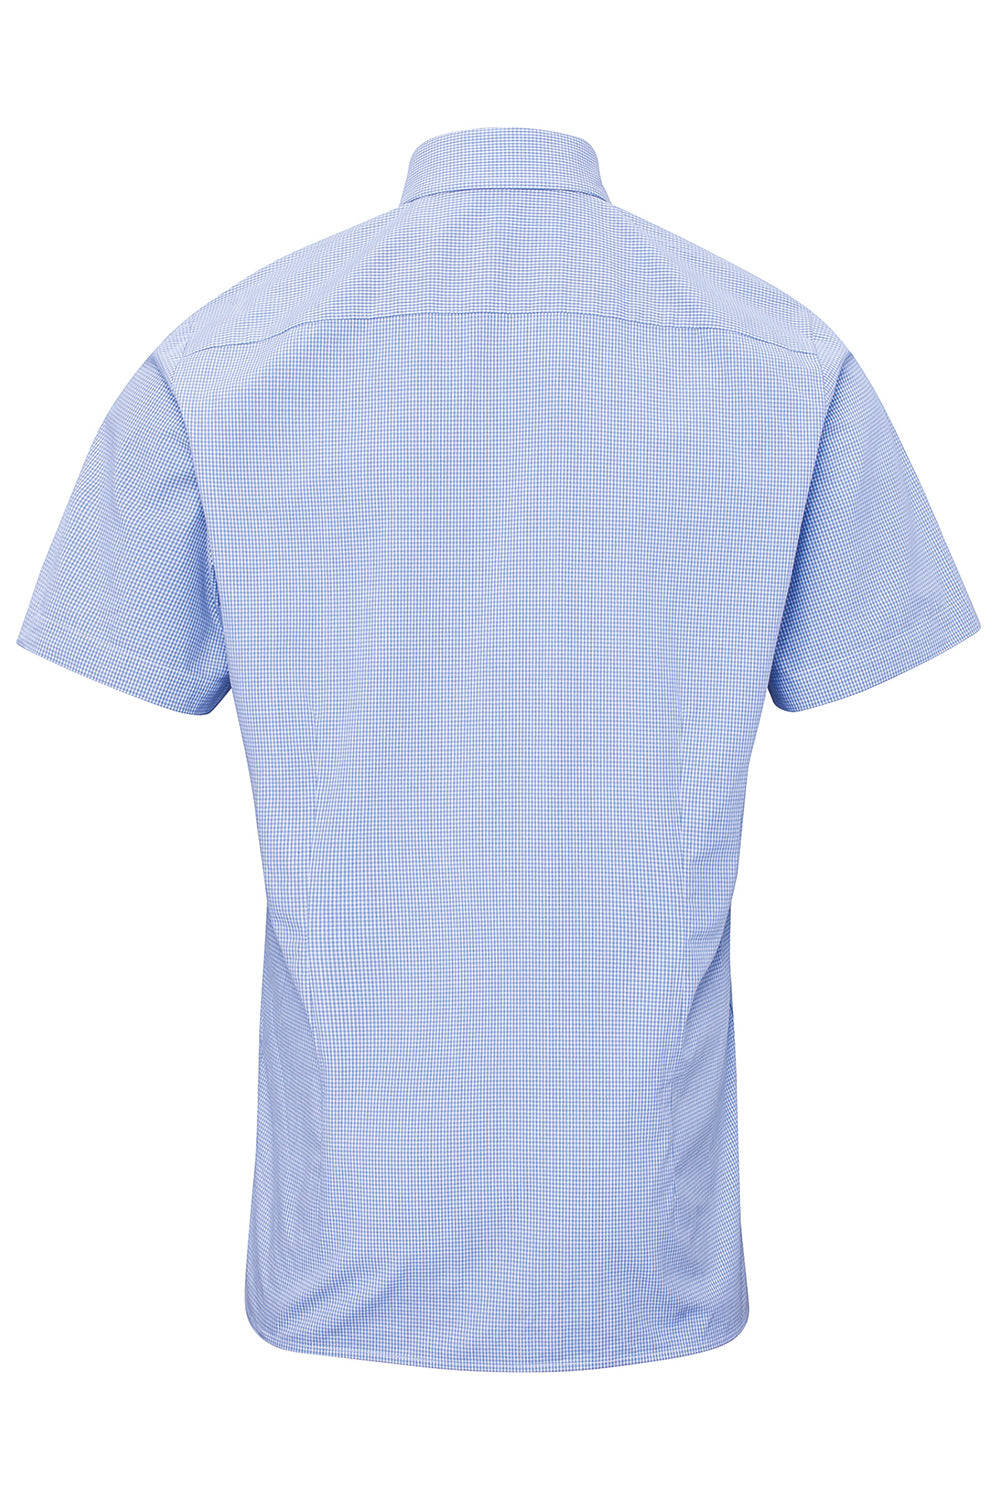 Artisan Collection RP221 Mens Microcheck Gingham Short Sleeve Button Down Shirt Light Blue/White Model Flat Back